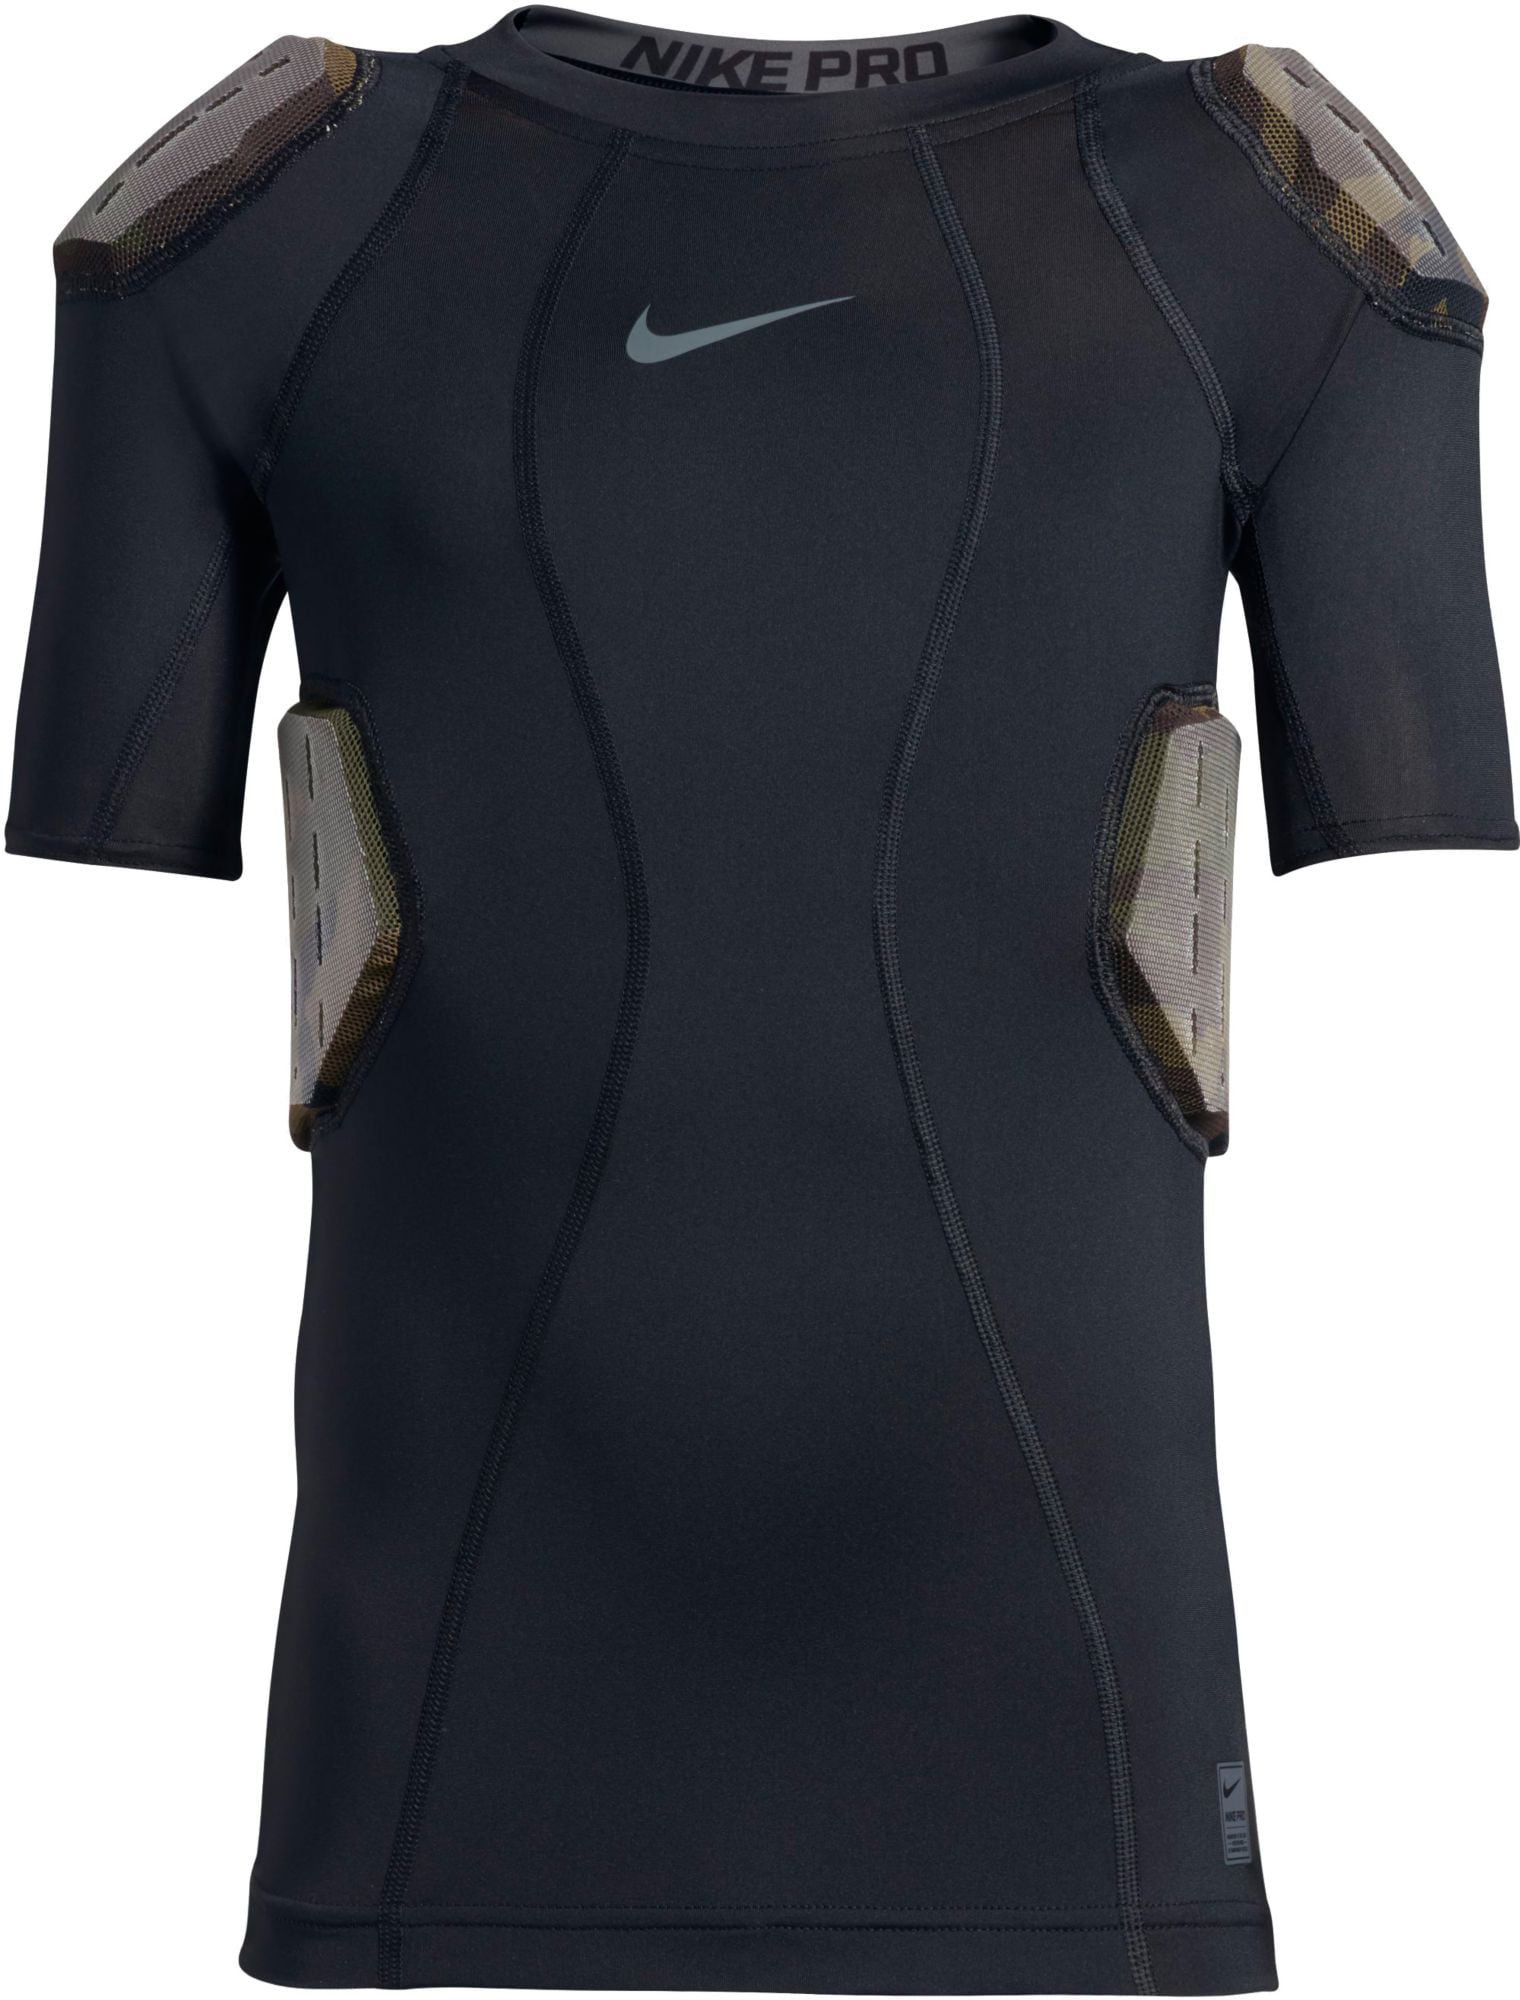 New Mens XL Nike Pro Combat Padded Compression Shirt Football